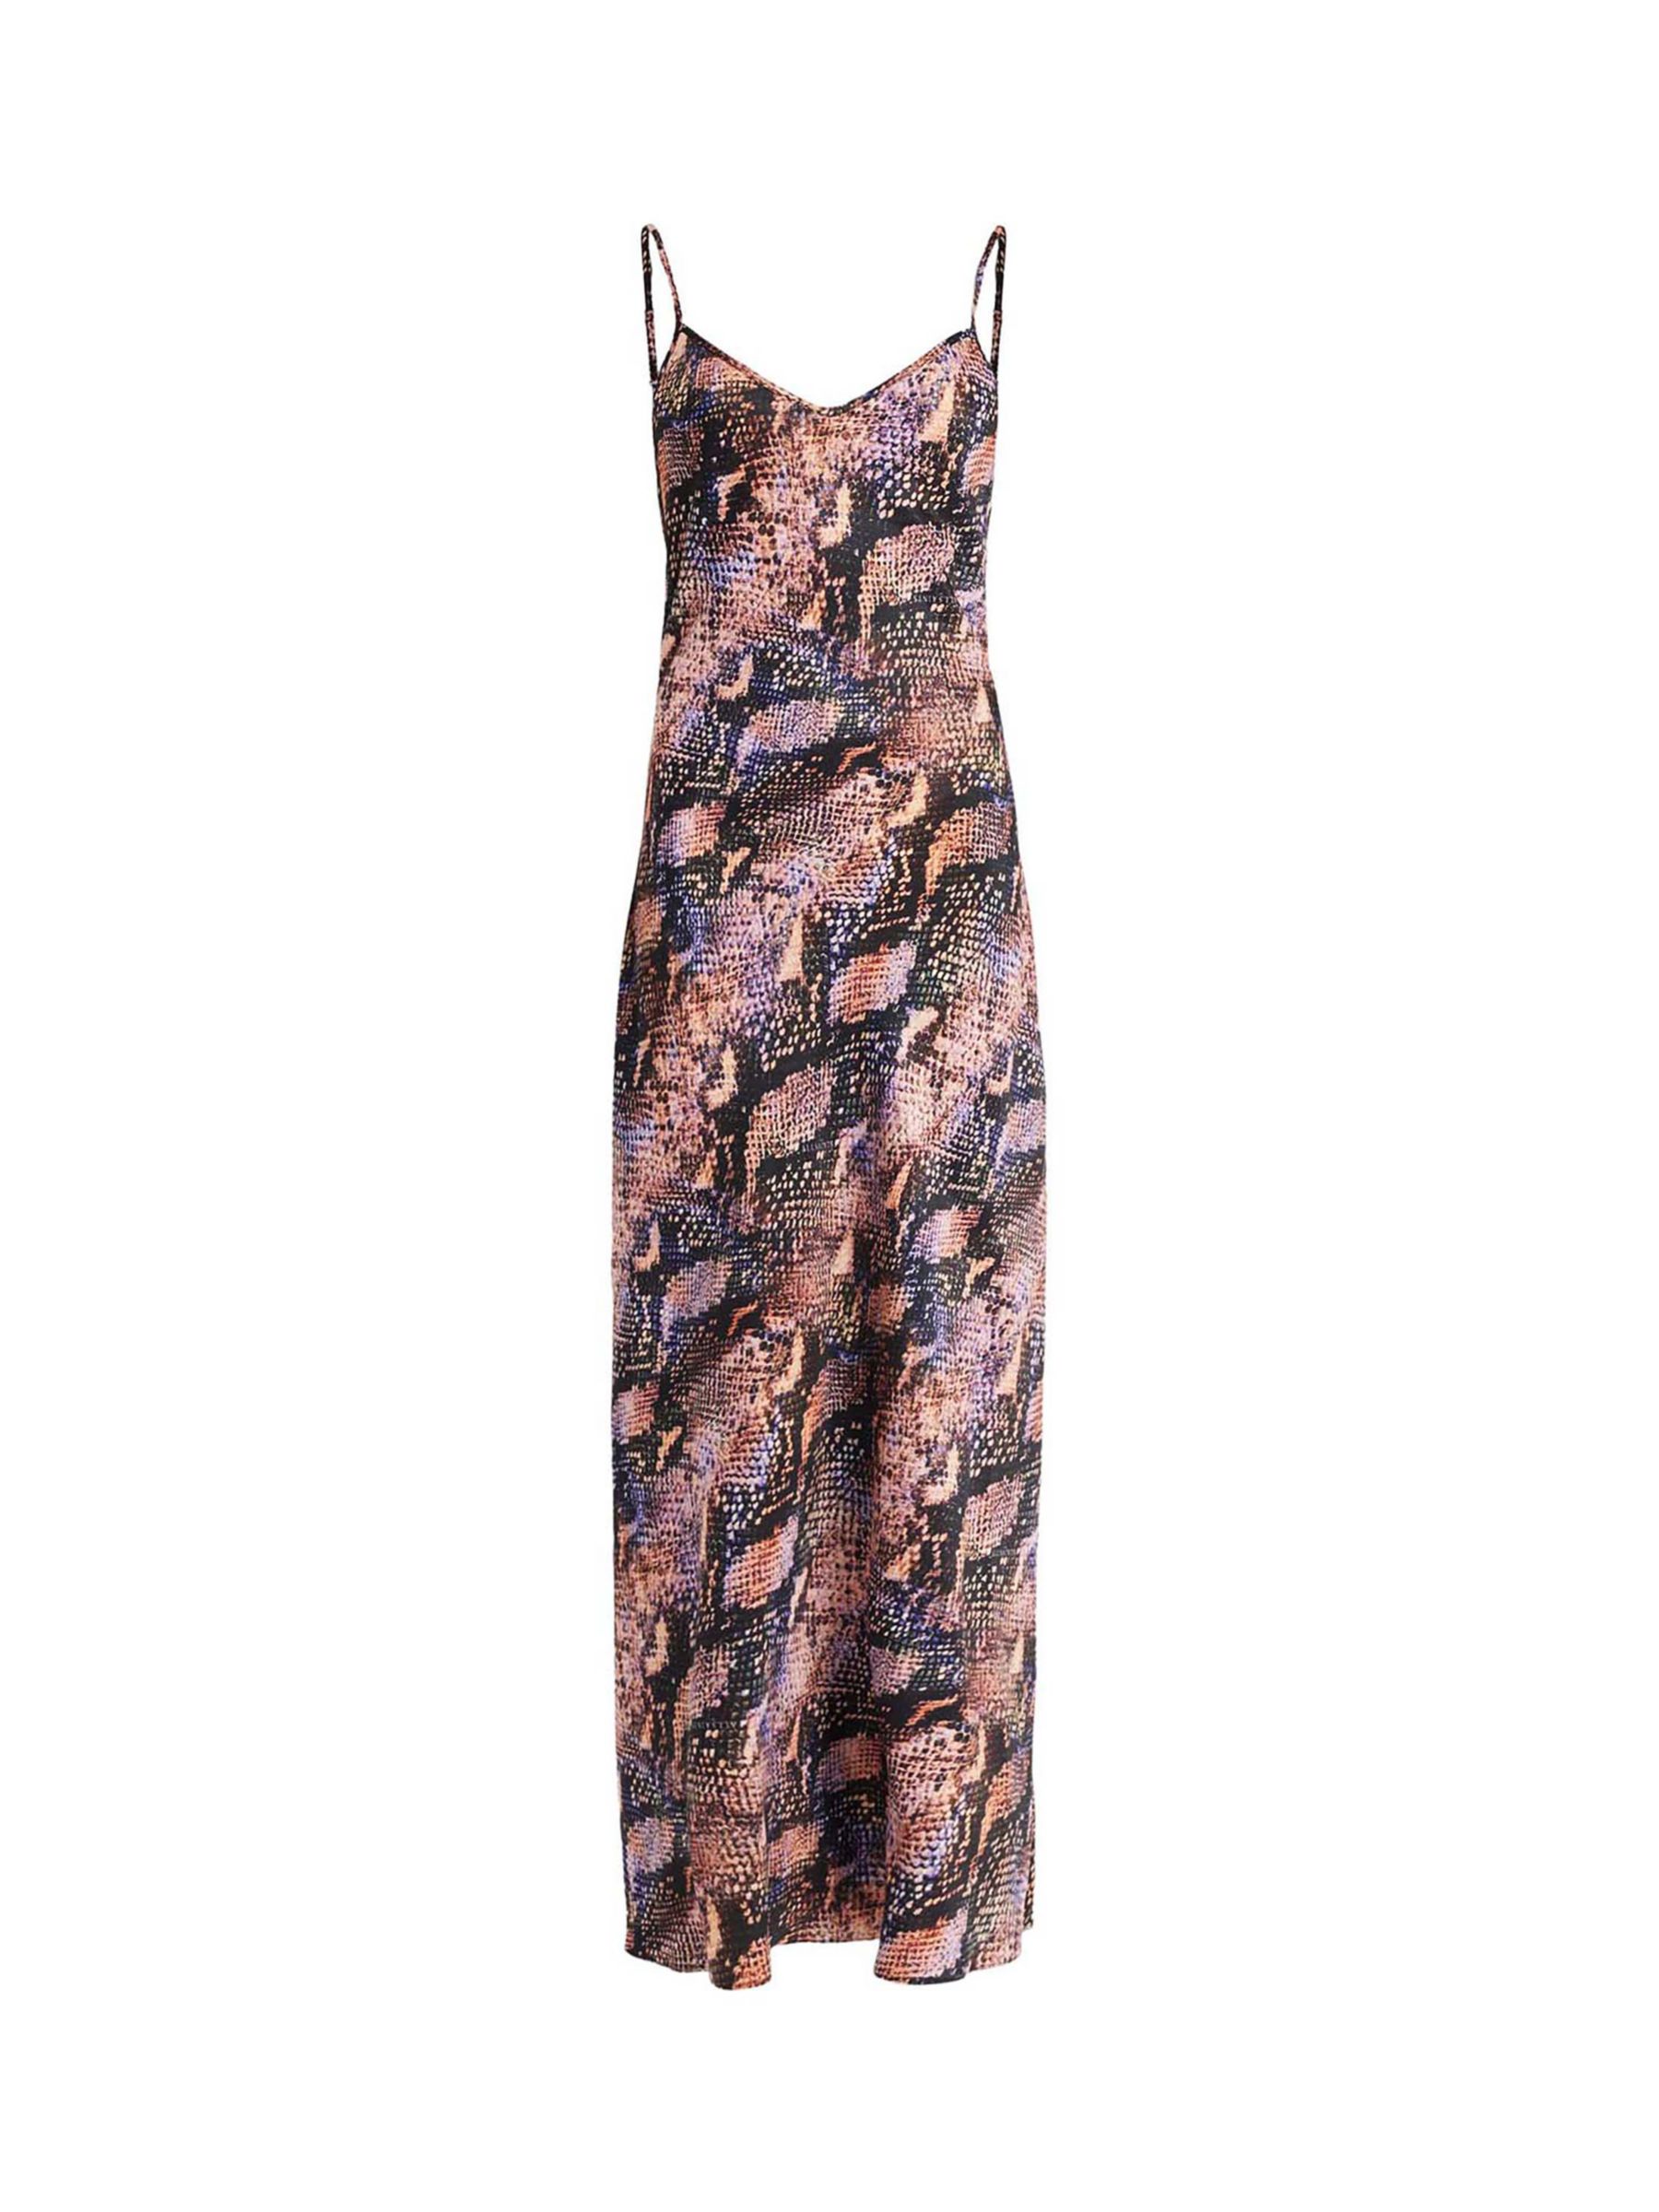 AllSaints Bryony Tahoe Snake Print Midi Slip Dress, Tan Brown, 6